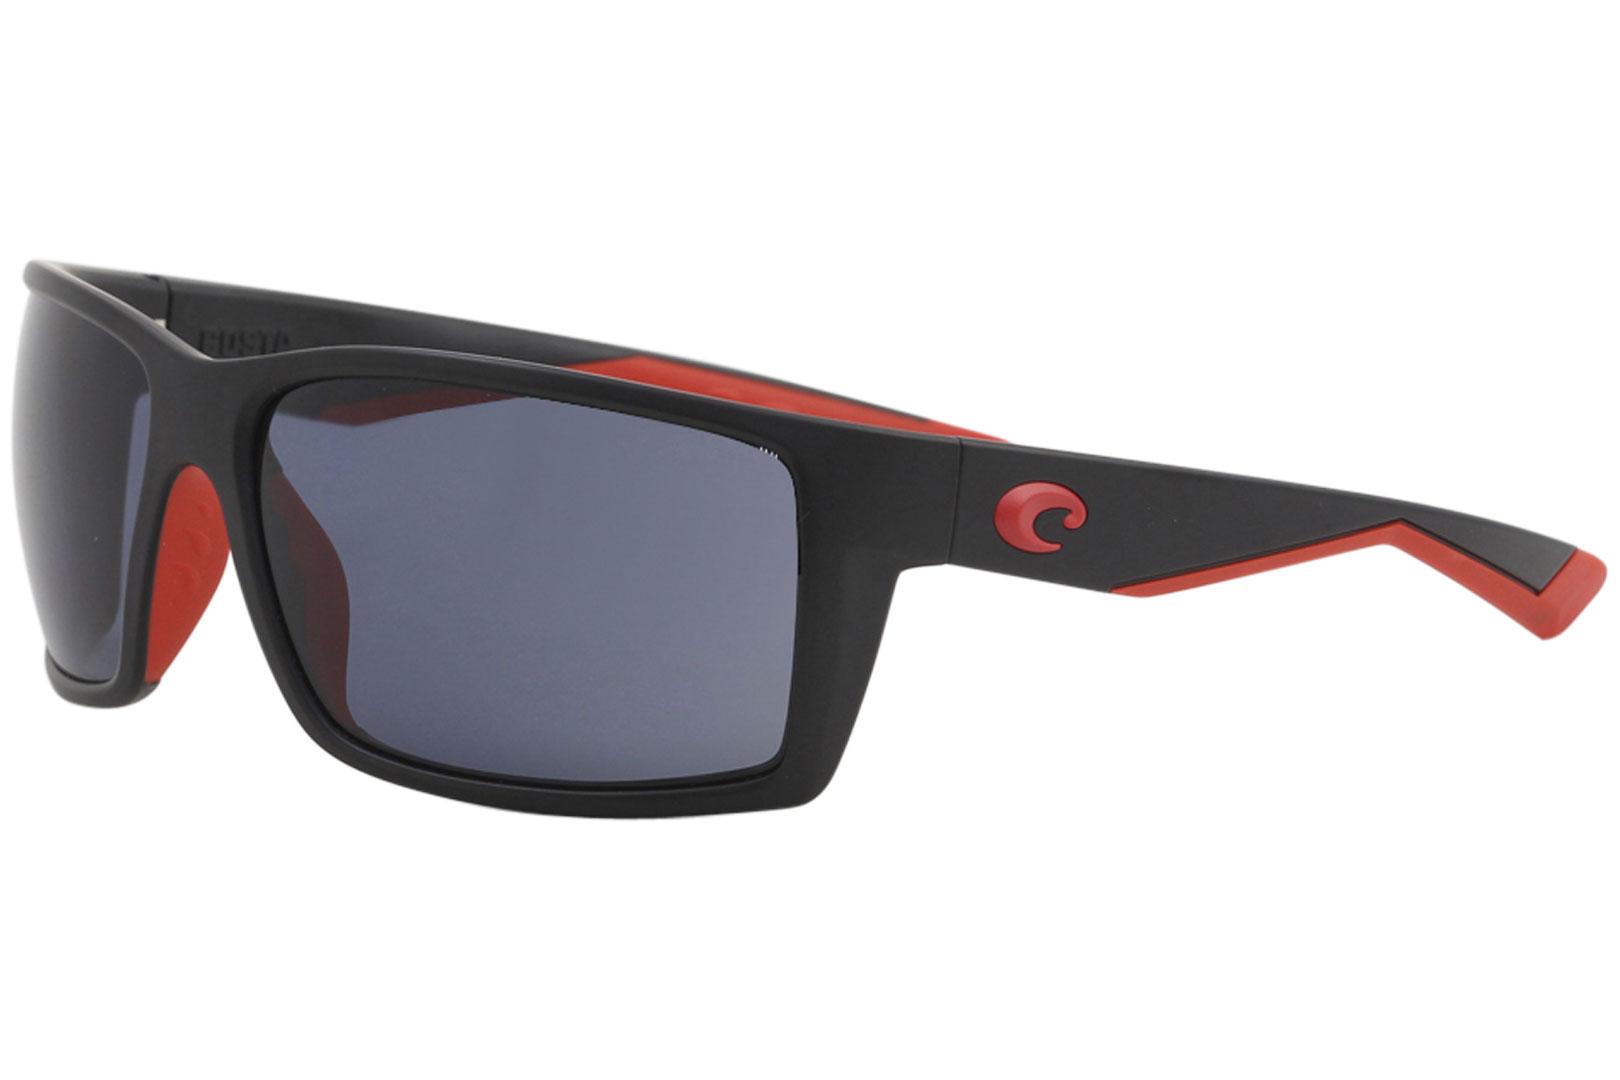 RFT 197 Race Black Rectangle Polarized Sunglasses 64mm - Race Black/Polarized Grey   580P - Lens 64 Bridge 16 B 42 Temple 112mm - Costa Del Mar Reefton